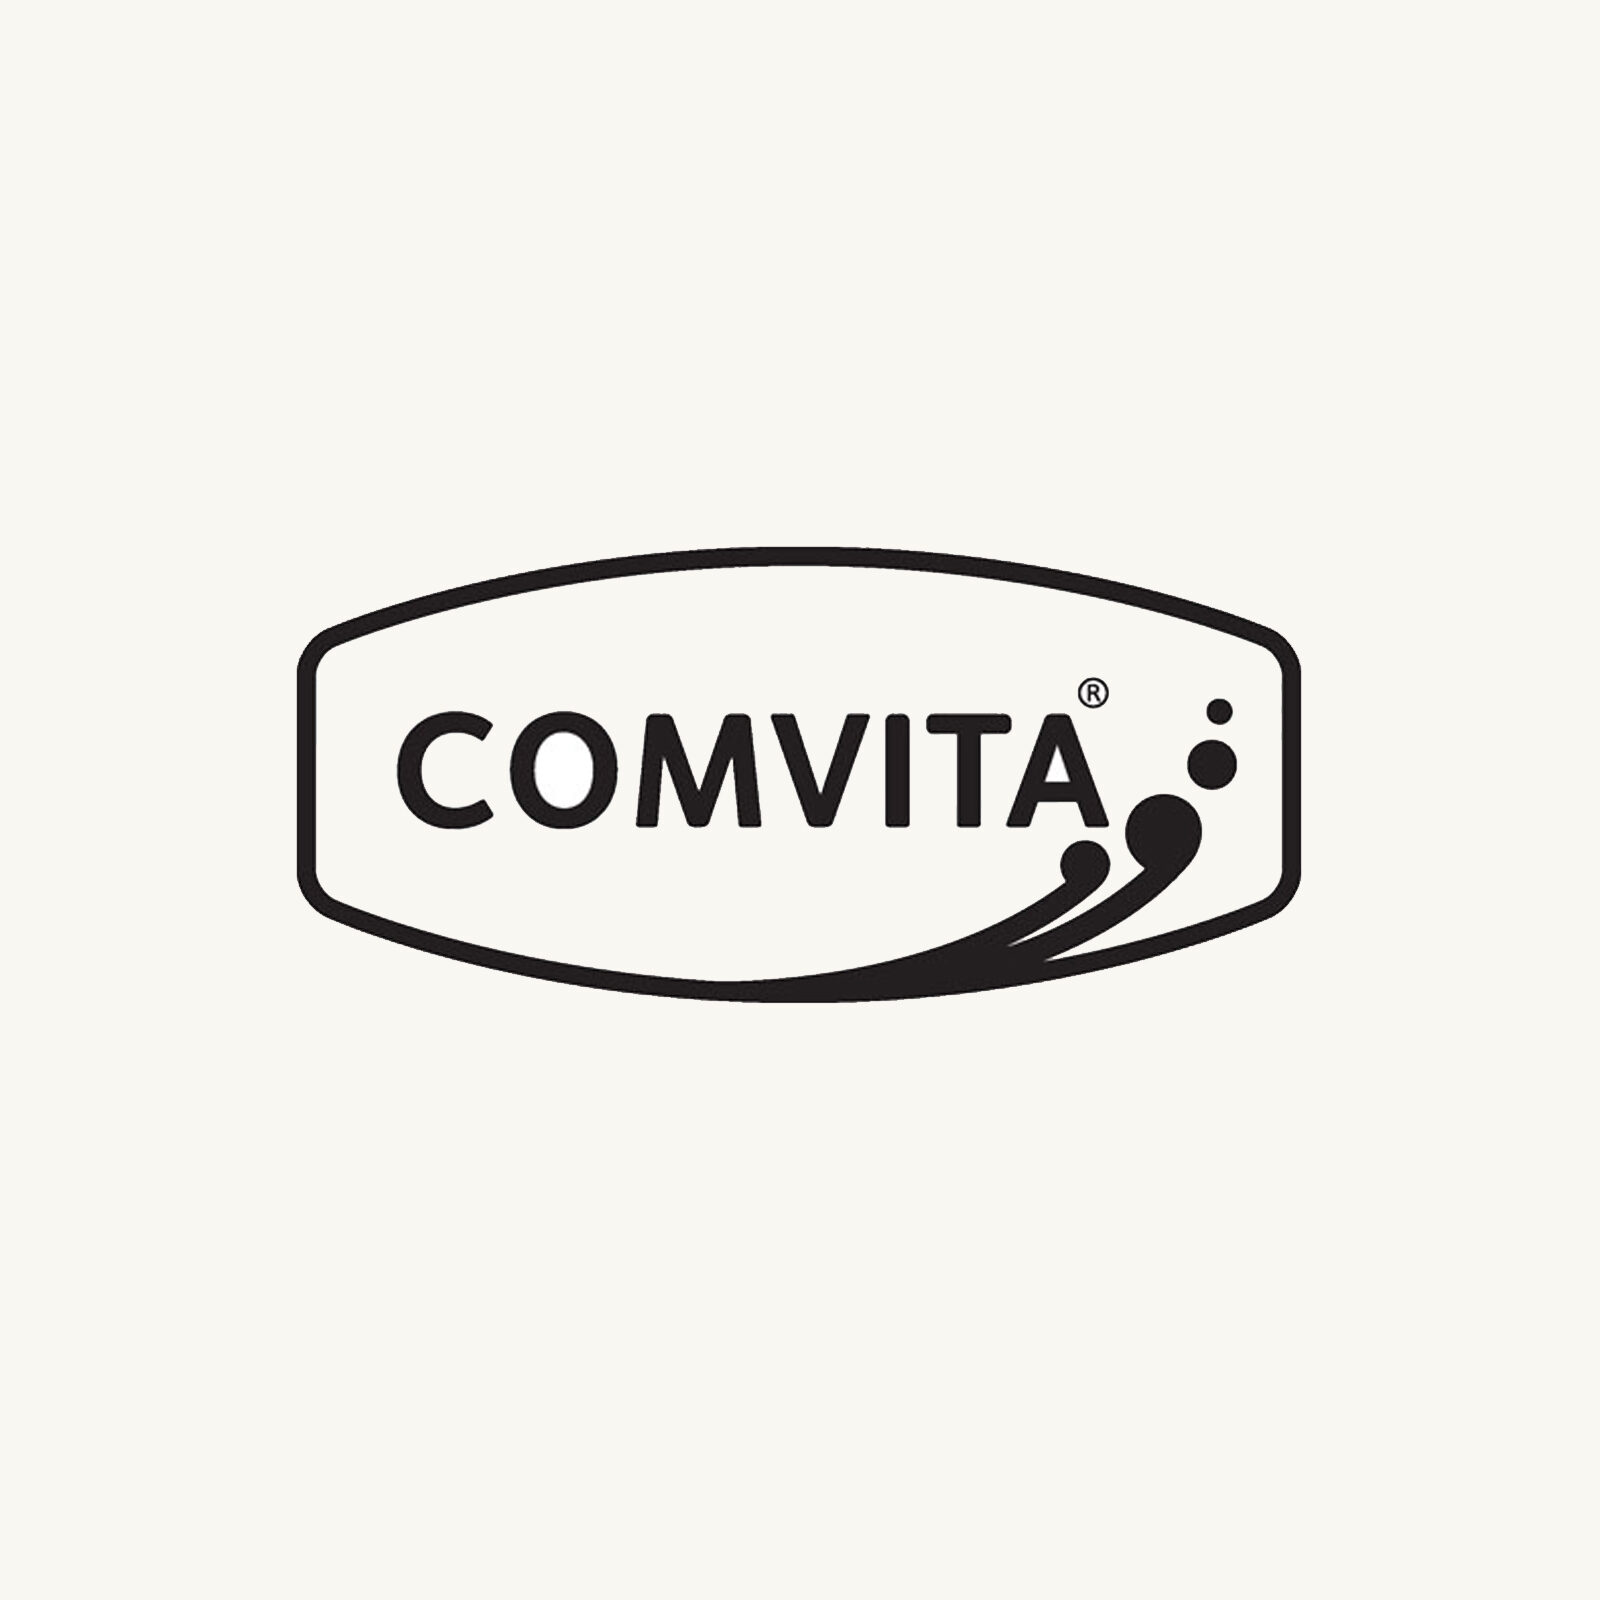 Radhika Sharma appointed Financial Accountant at Comvita